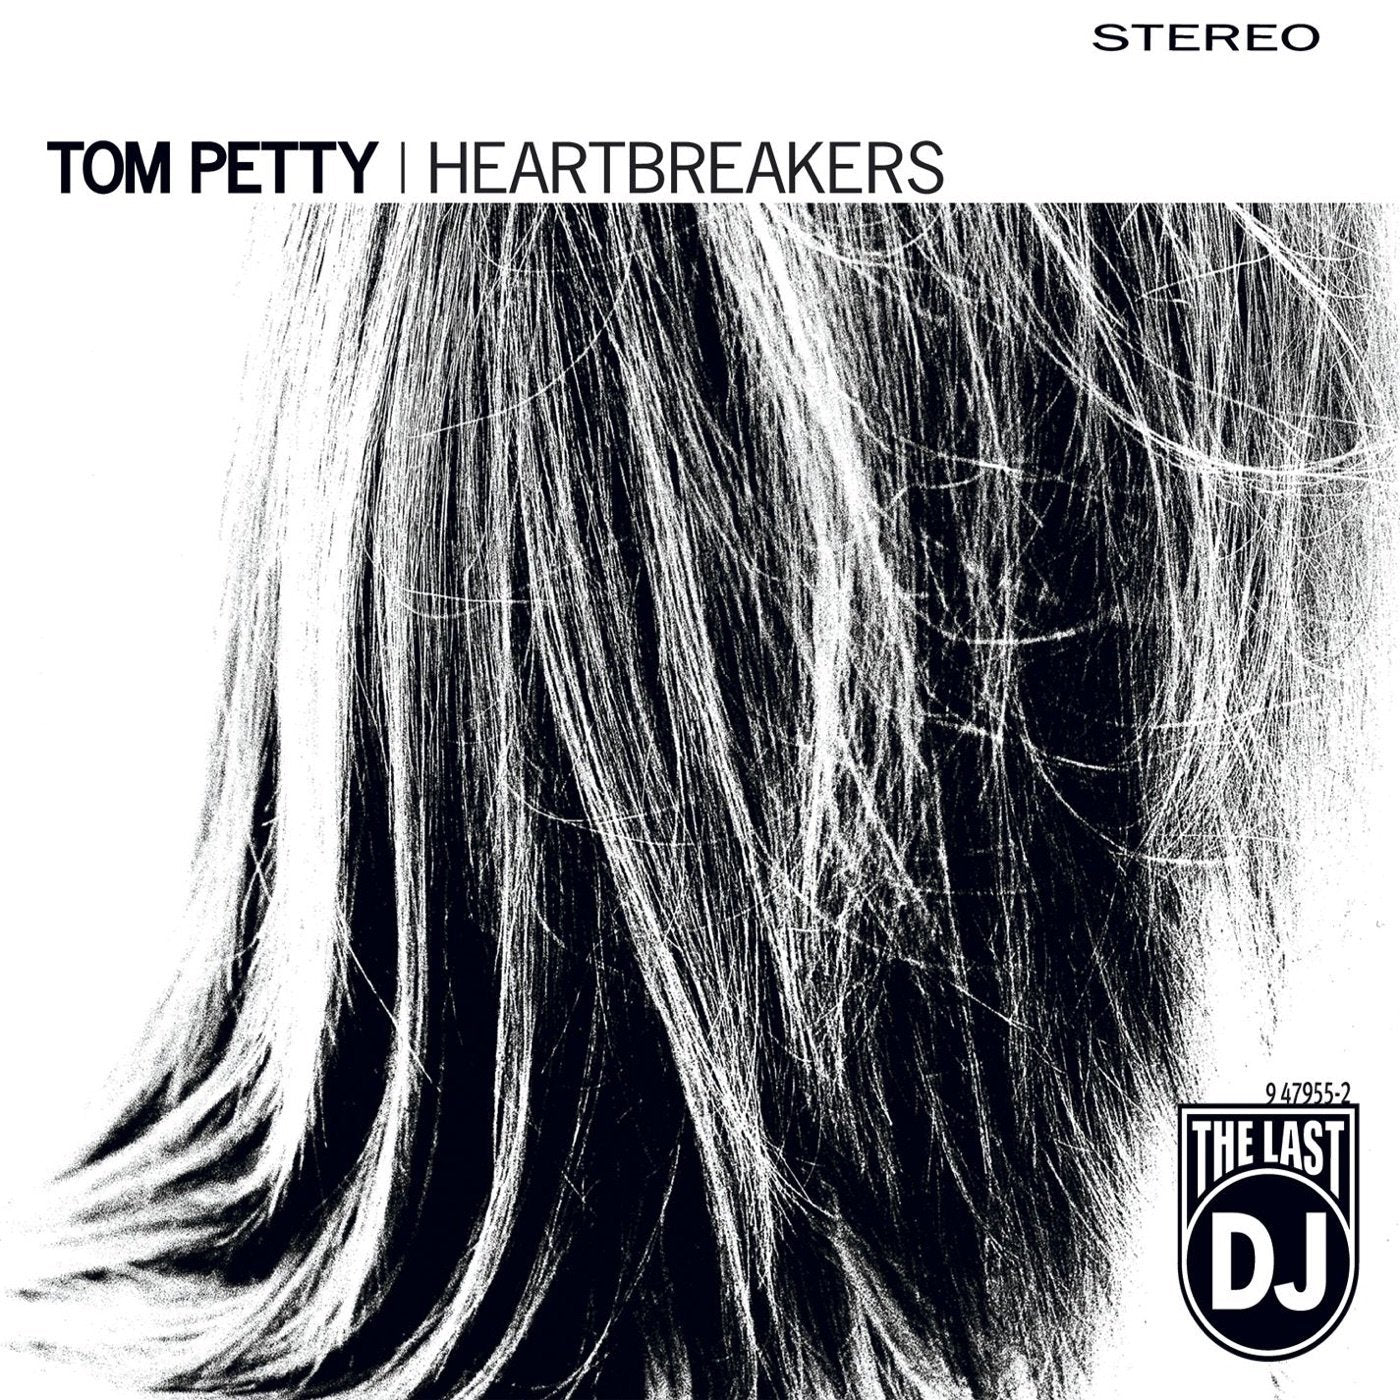 Tom Petty and the Heartbreakers - The Last DJ (Vinyl 2LP)